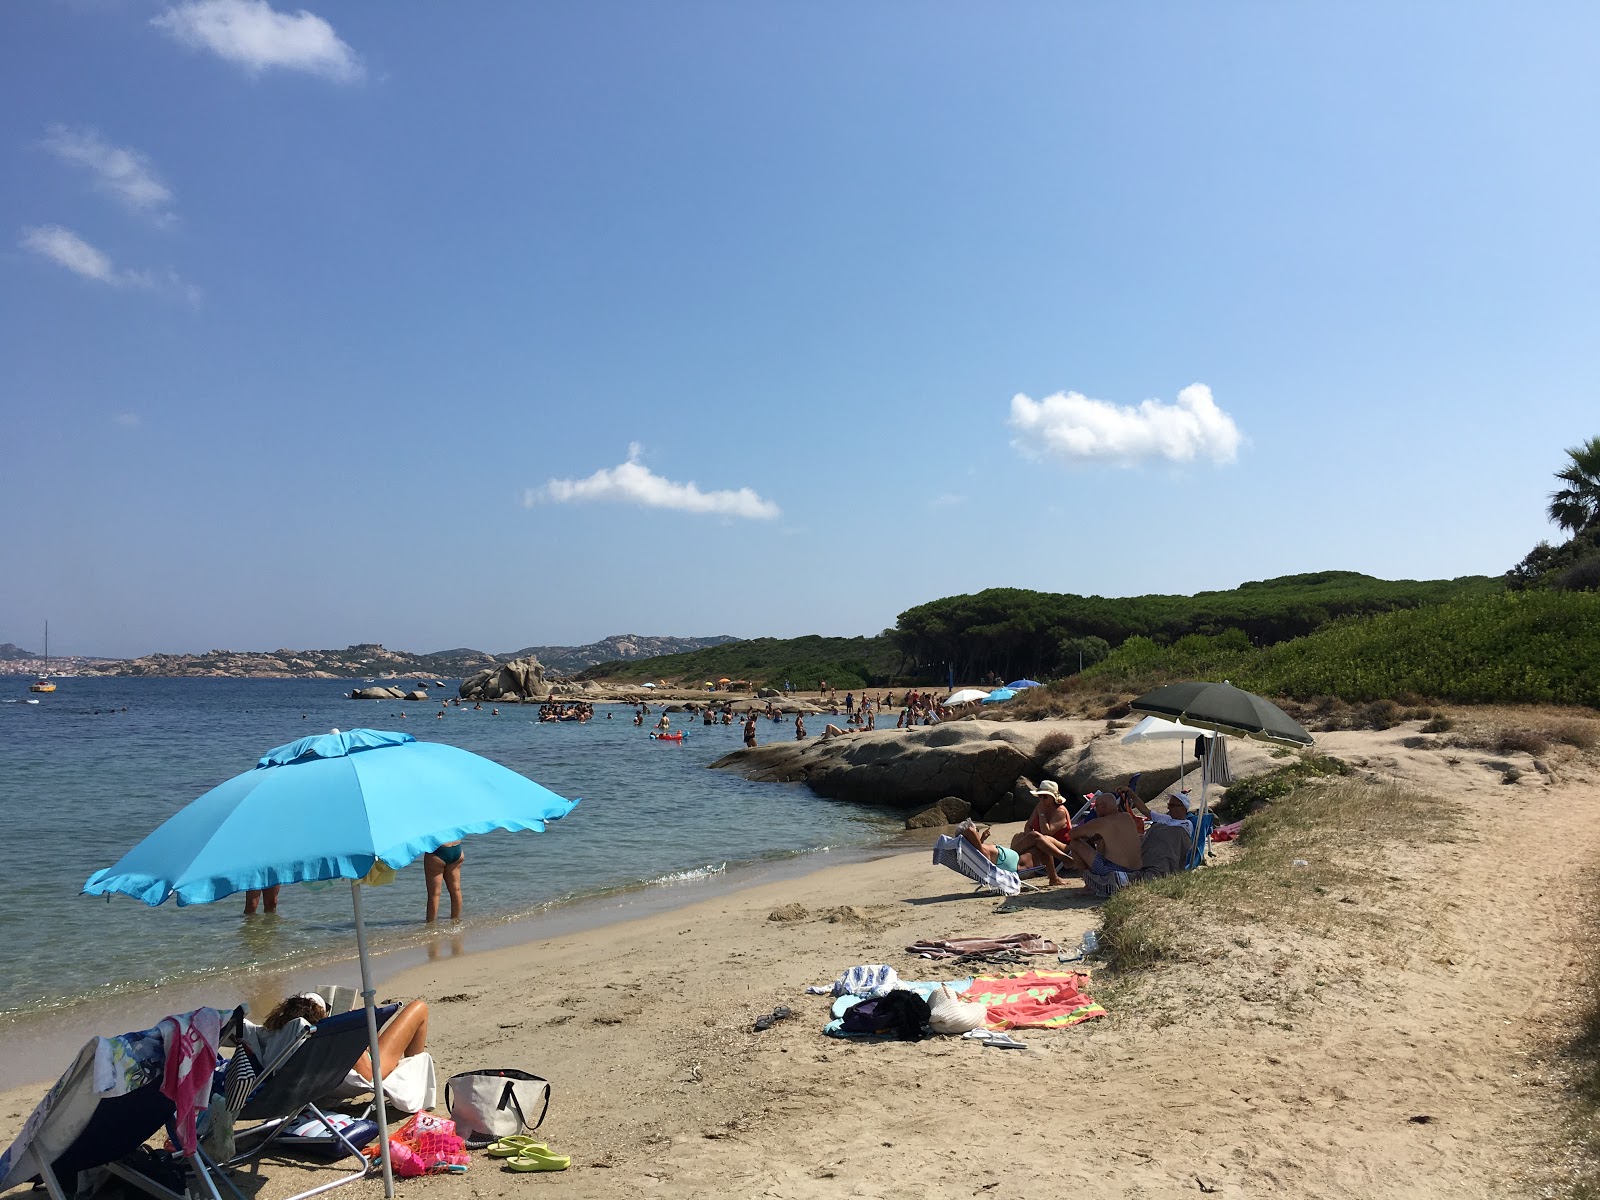 Foto de Spiaggia dell'Isolotto - lugar popular entre os apreciadores de relaxamento